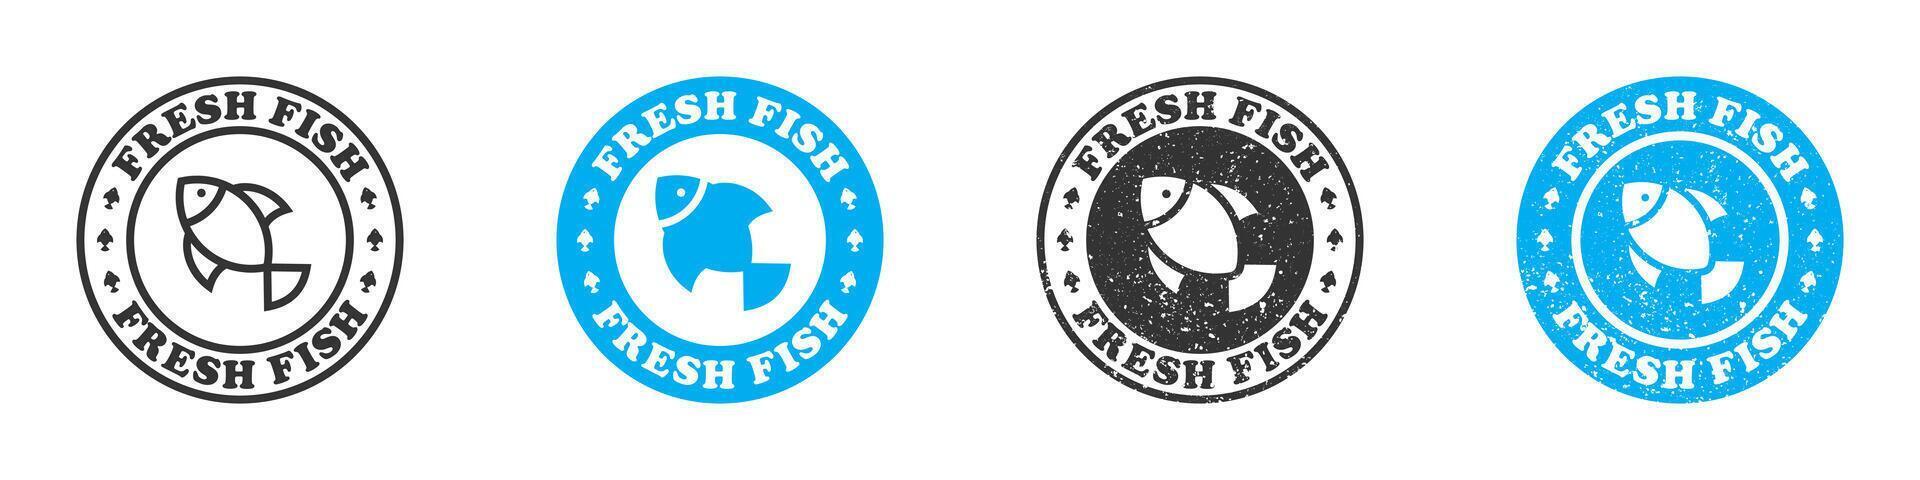 Fresh fish icon round badge. Vector illustration.